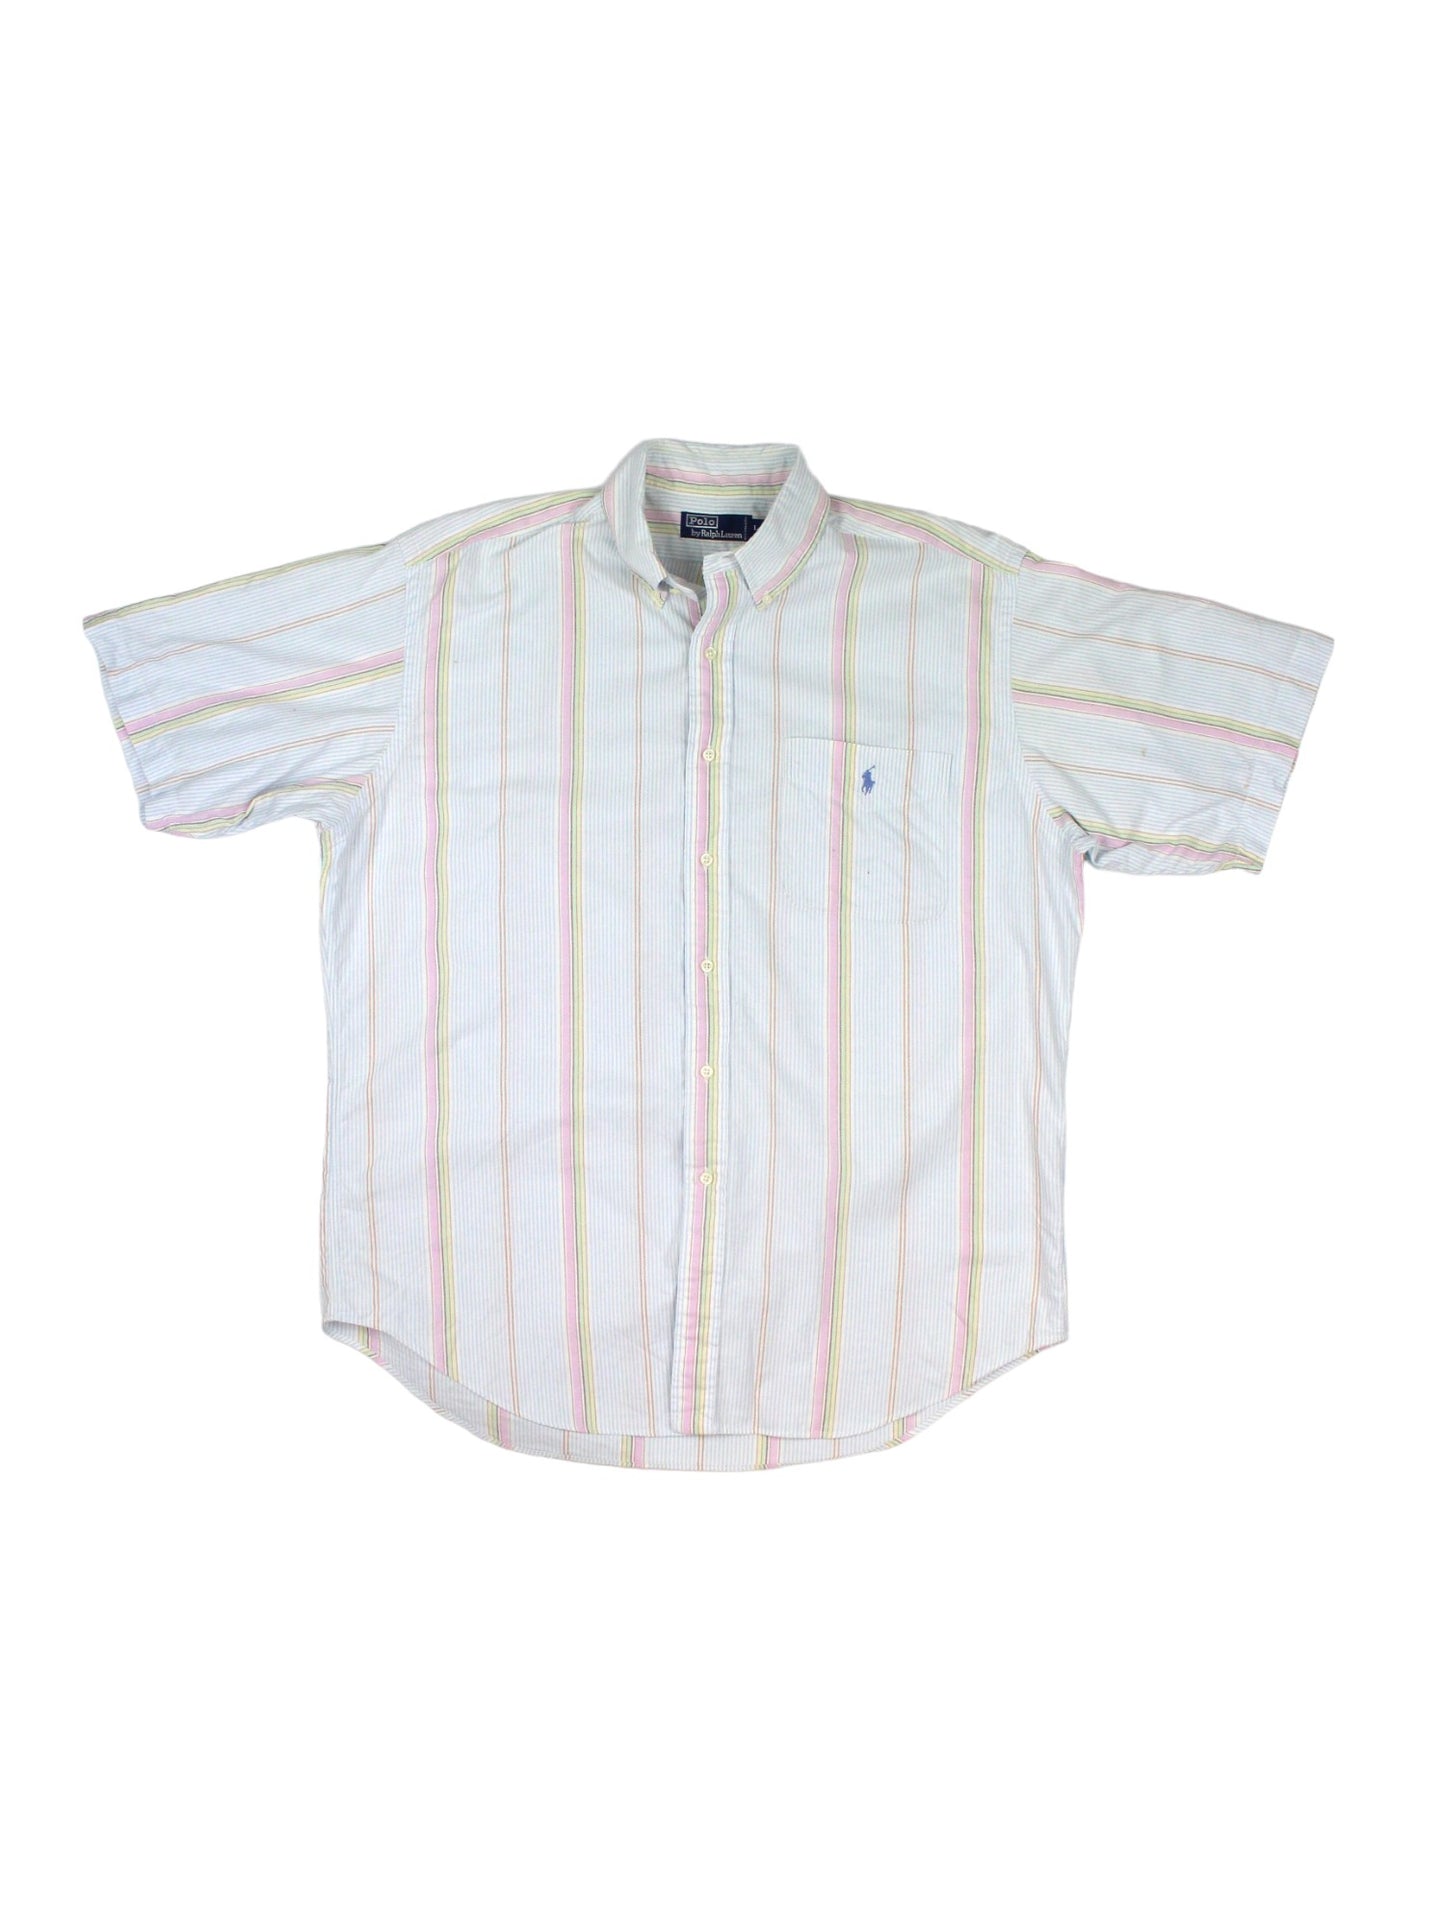 90s Polo Ralph Lauren Pastel Striped Shirt (XL)